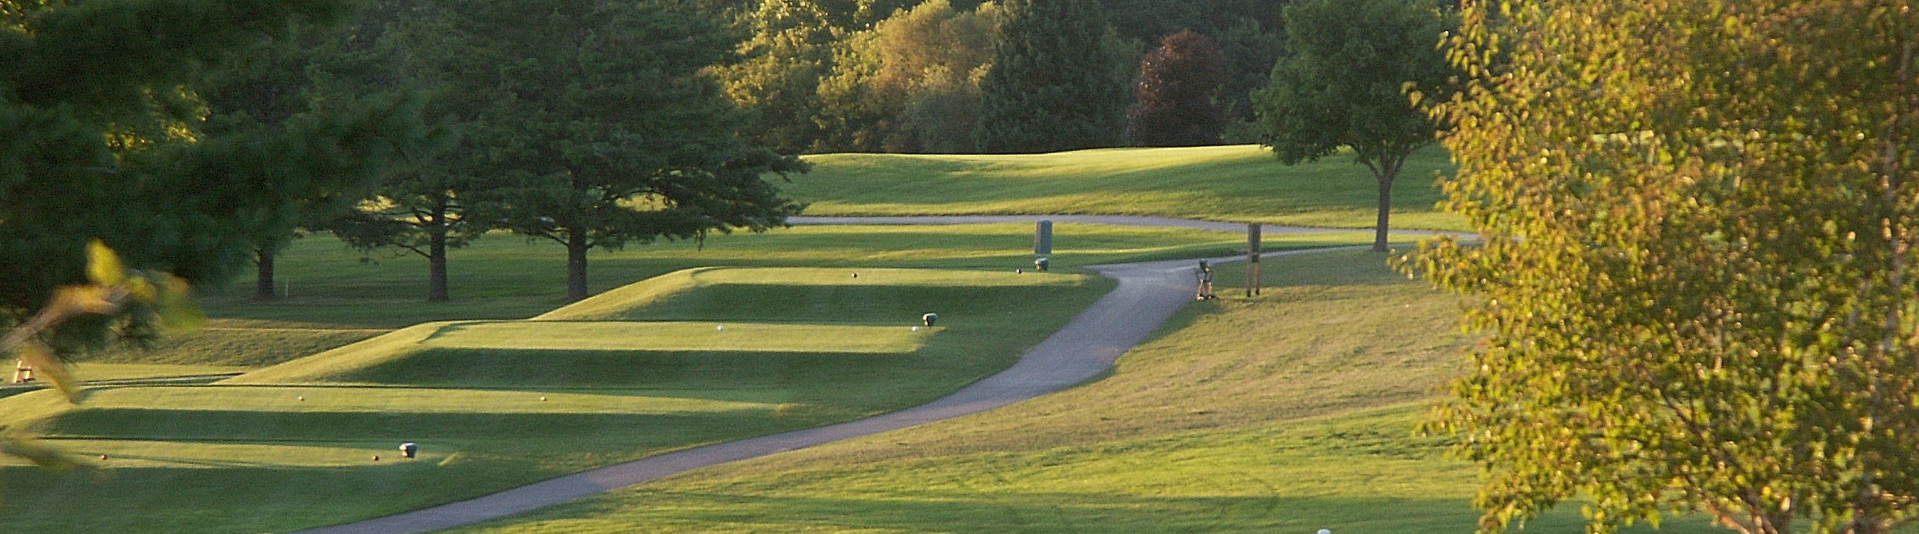 Golf course, cart path 